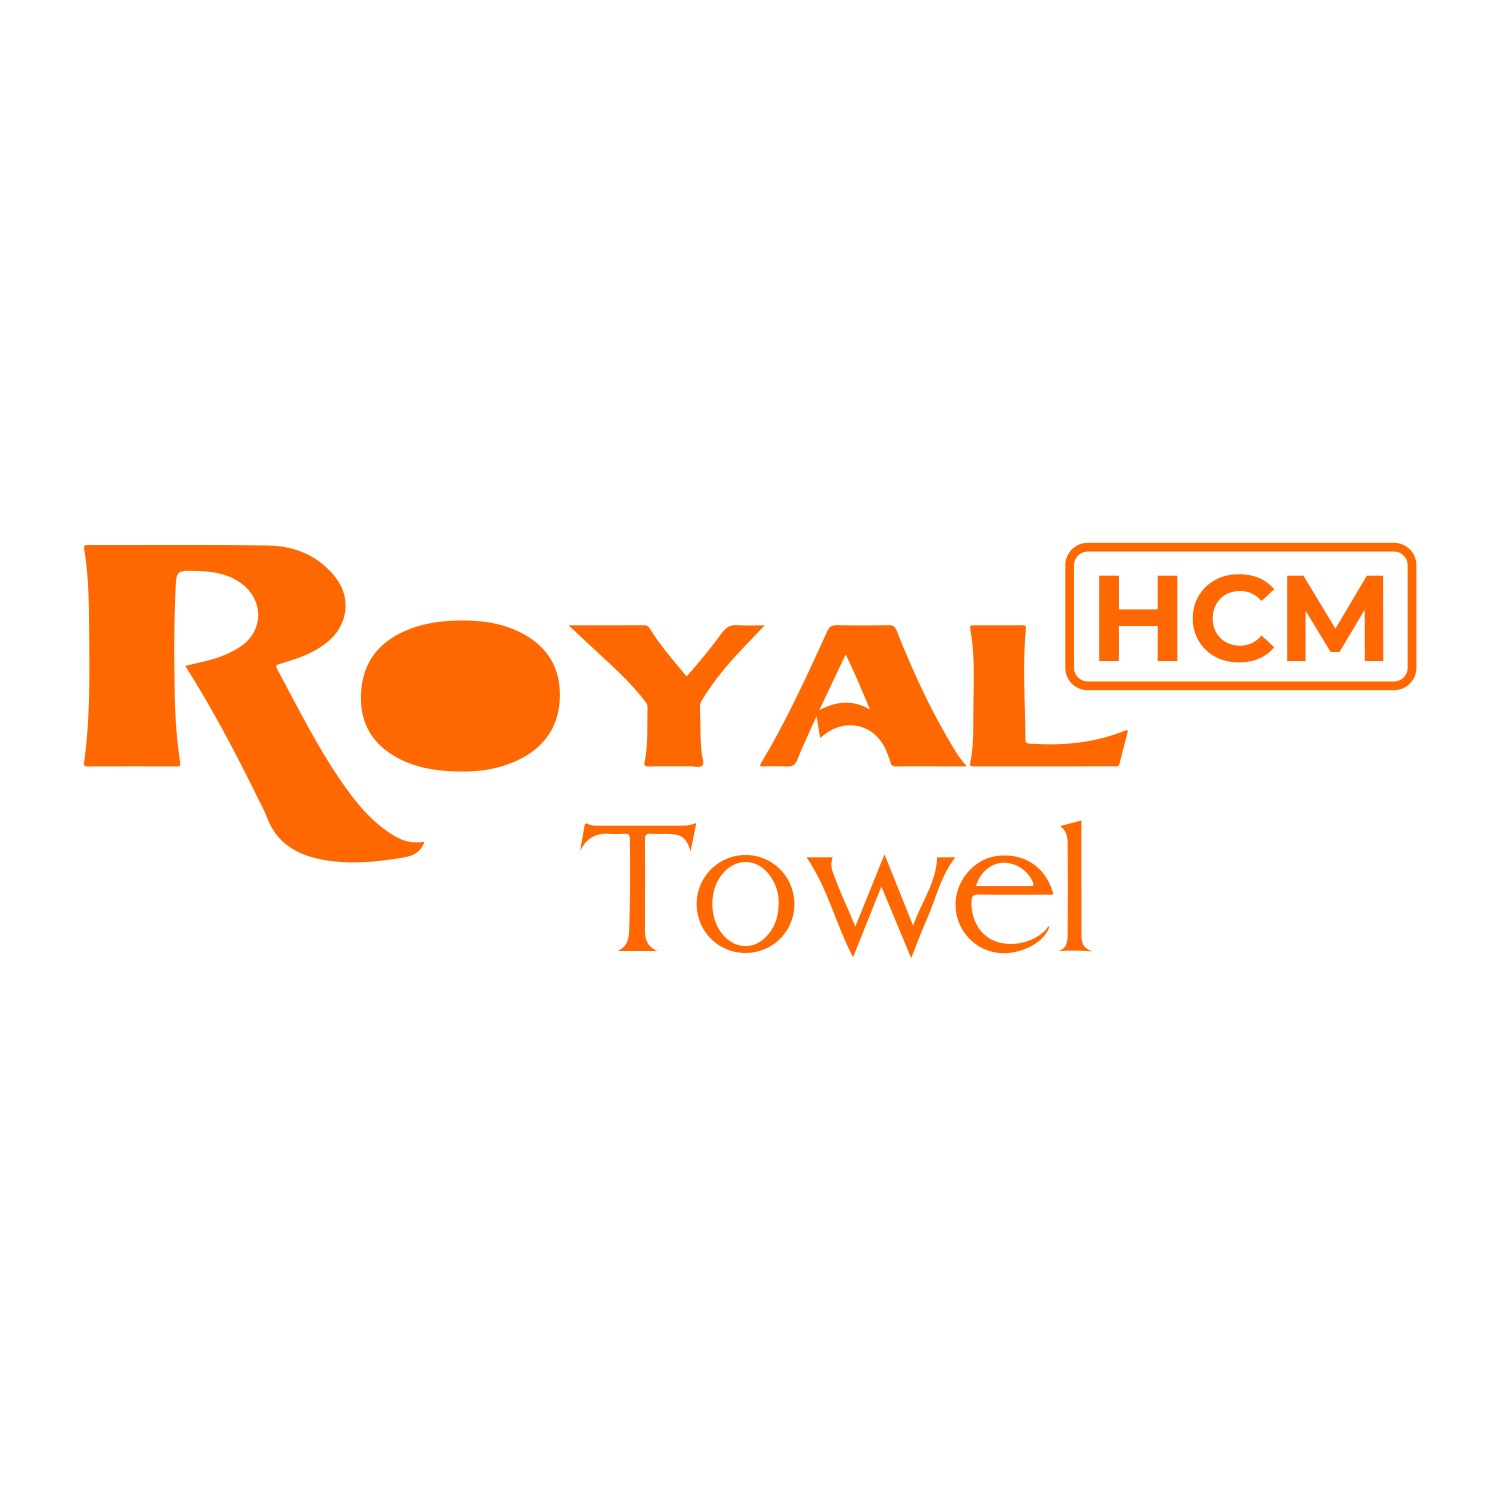 Royal Towel HCM